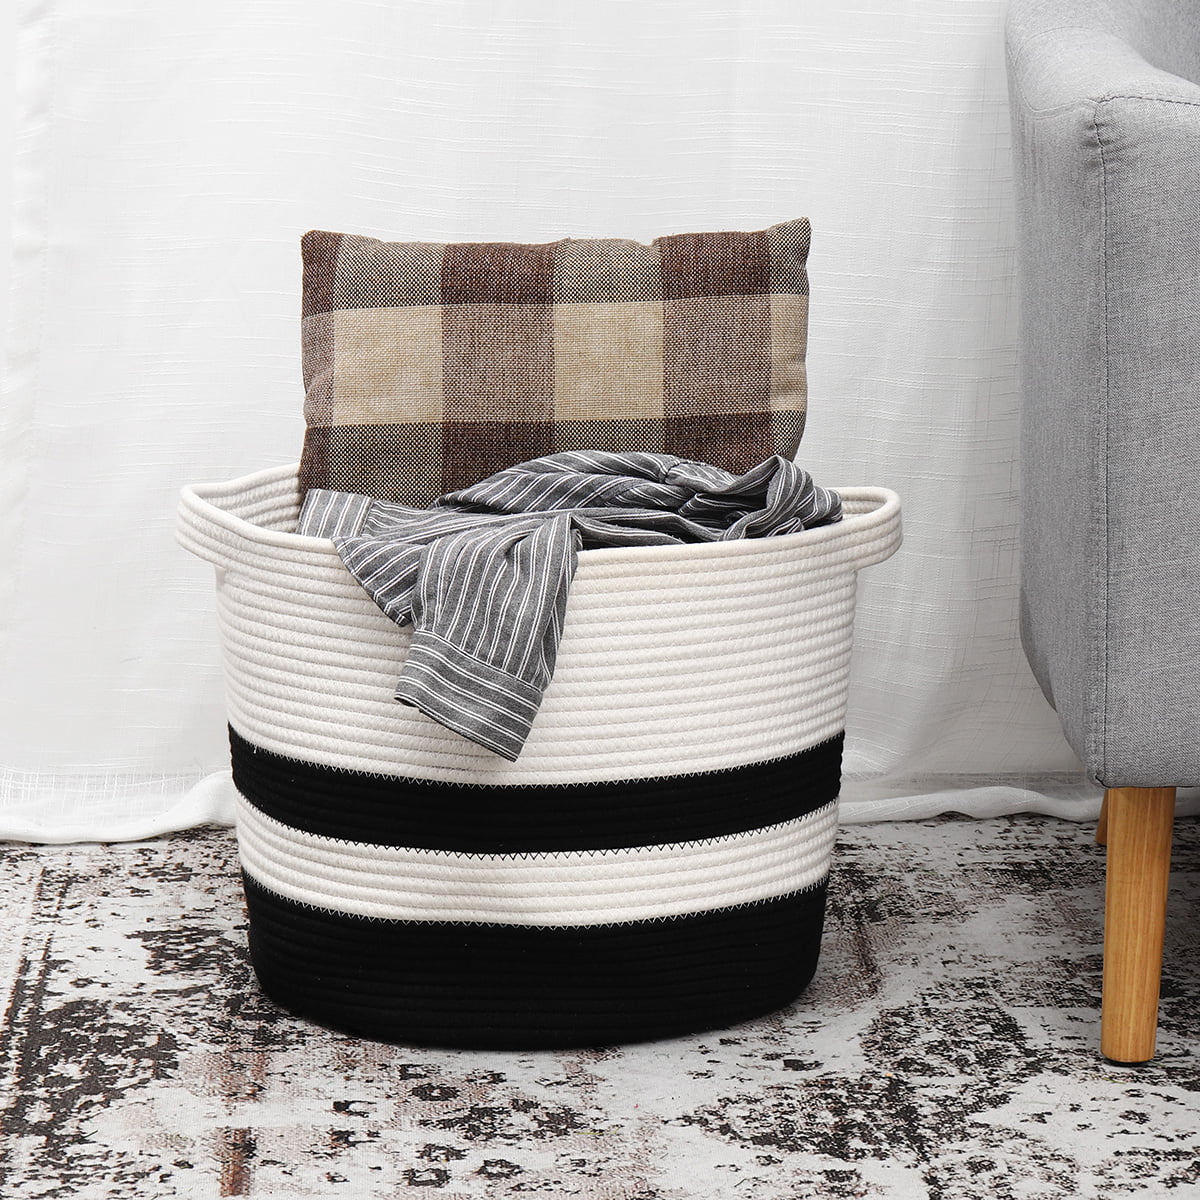 20X20X13 Decorative Cotton Rope Basket with Weave Handles,Grey Blanket Basket Large Laundry Hamper Toy Basket Round Woven Storage Basket 